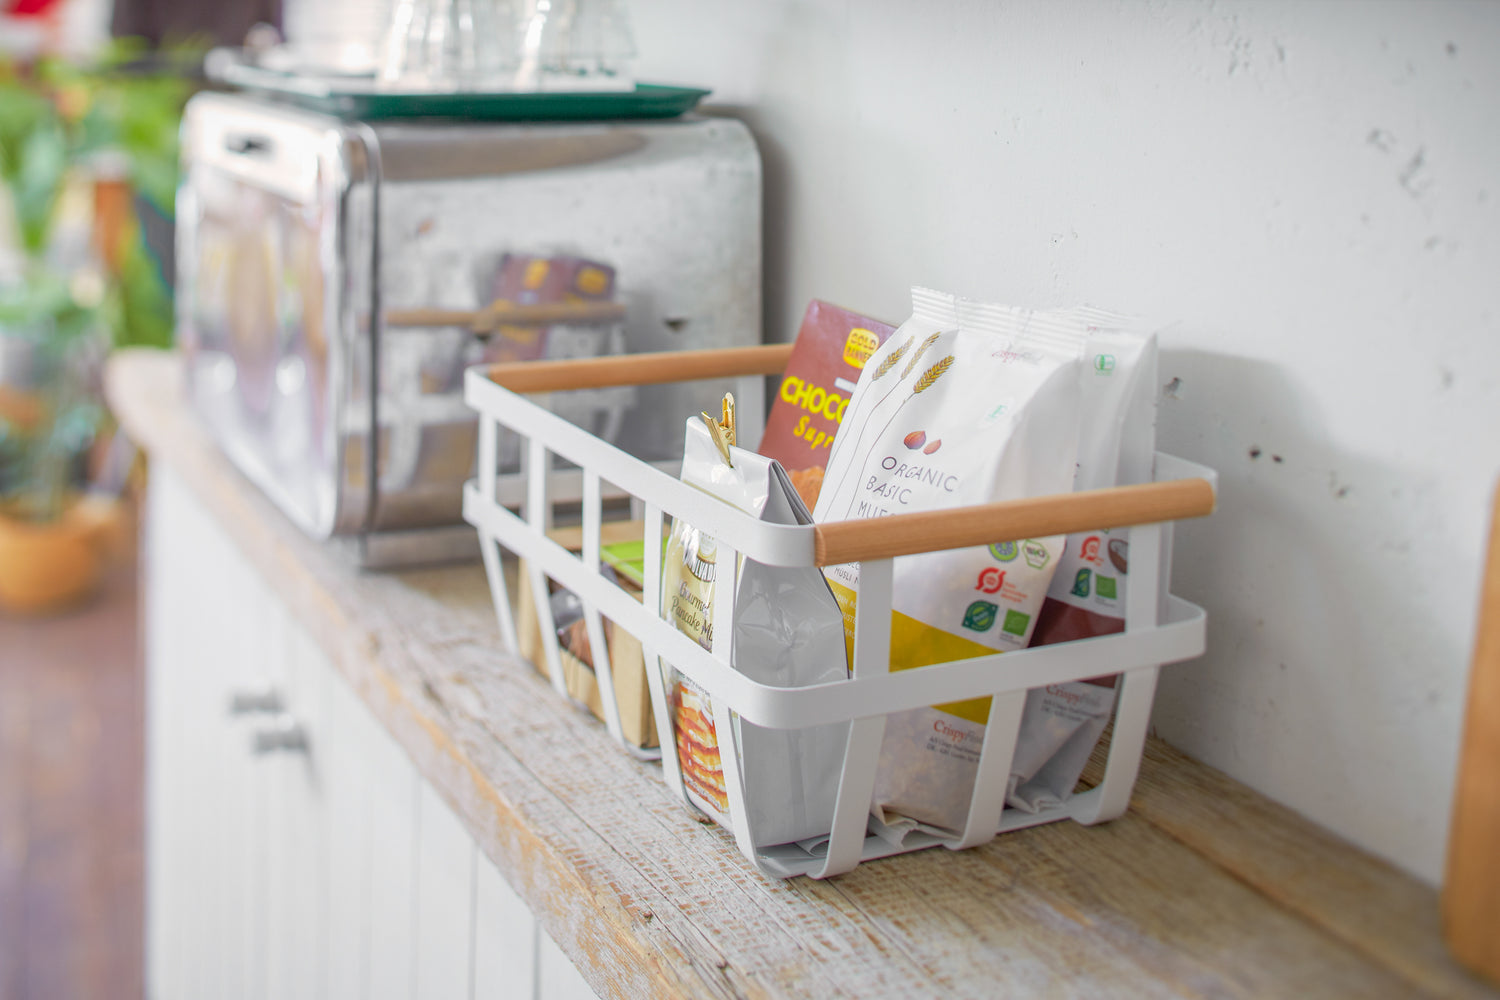 View 10 - Side view of white Storage Basket holding snack food on shelf by Yamazaki Home.